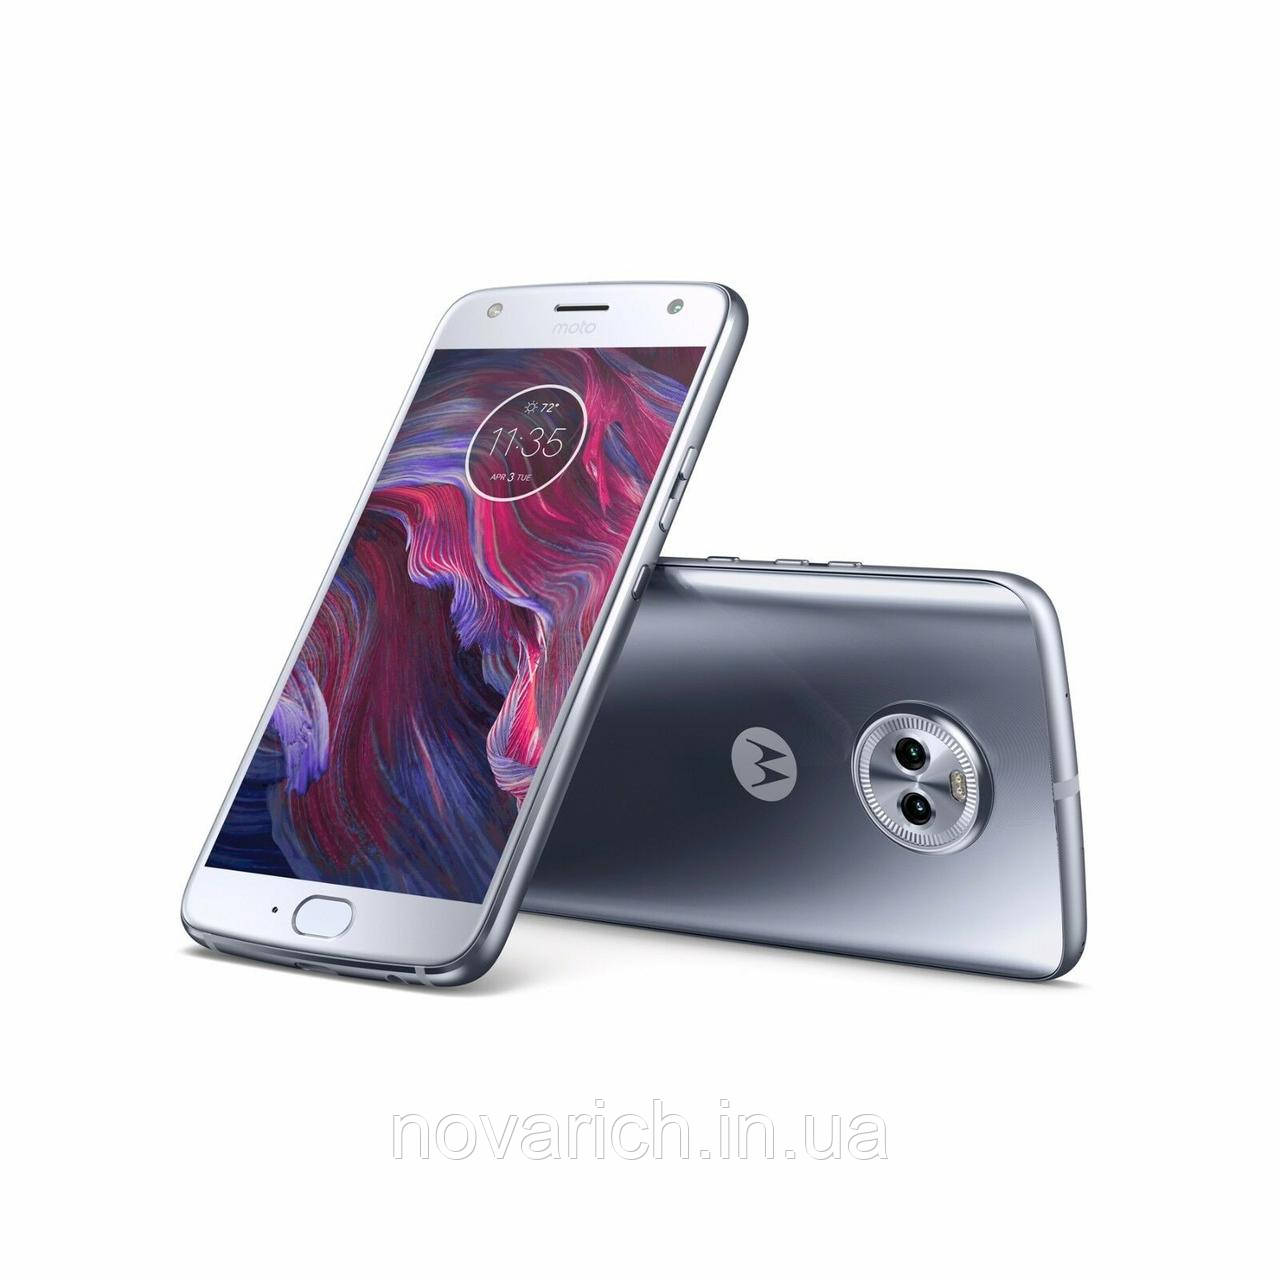 Смартфон Motorola Moto X4 Android One 4/64GB XT1900-1, NFC. Влагозащит